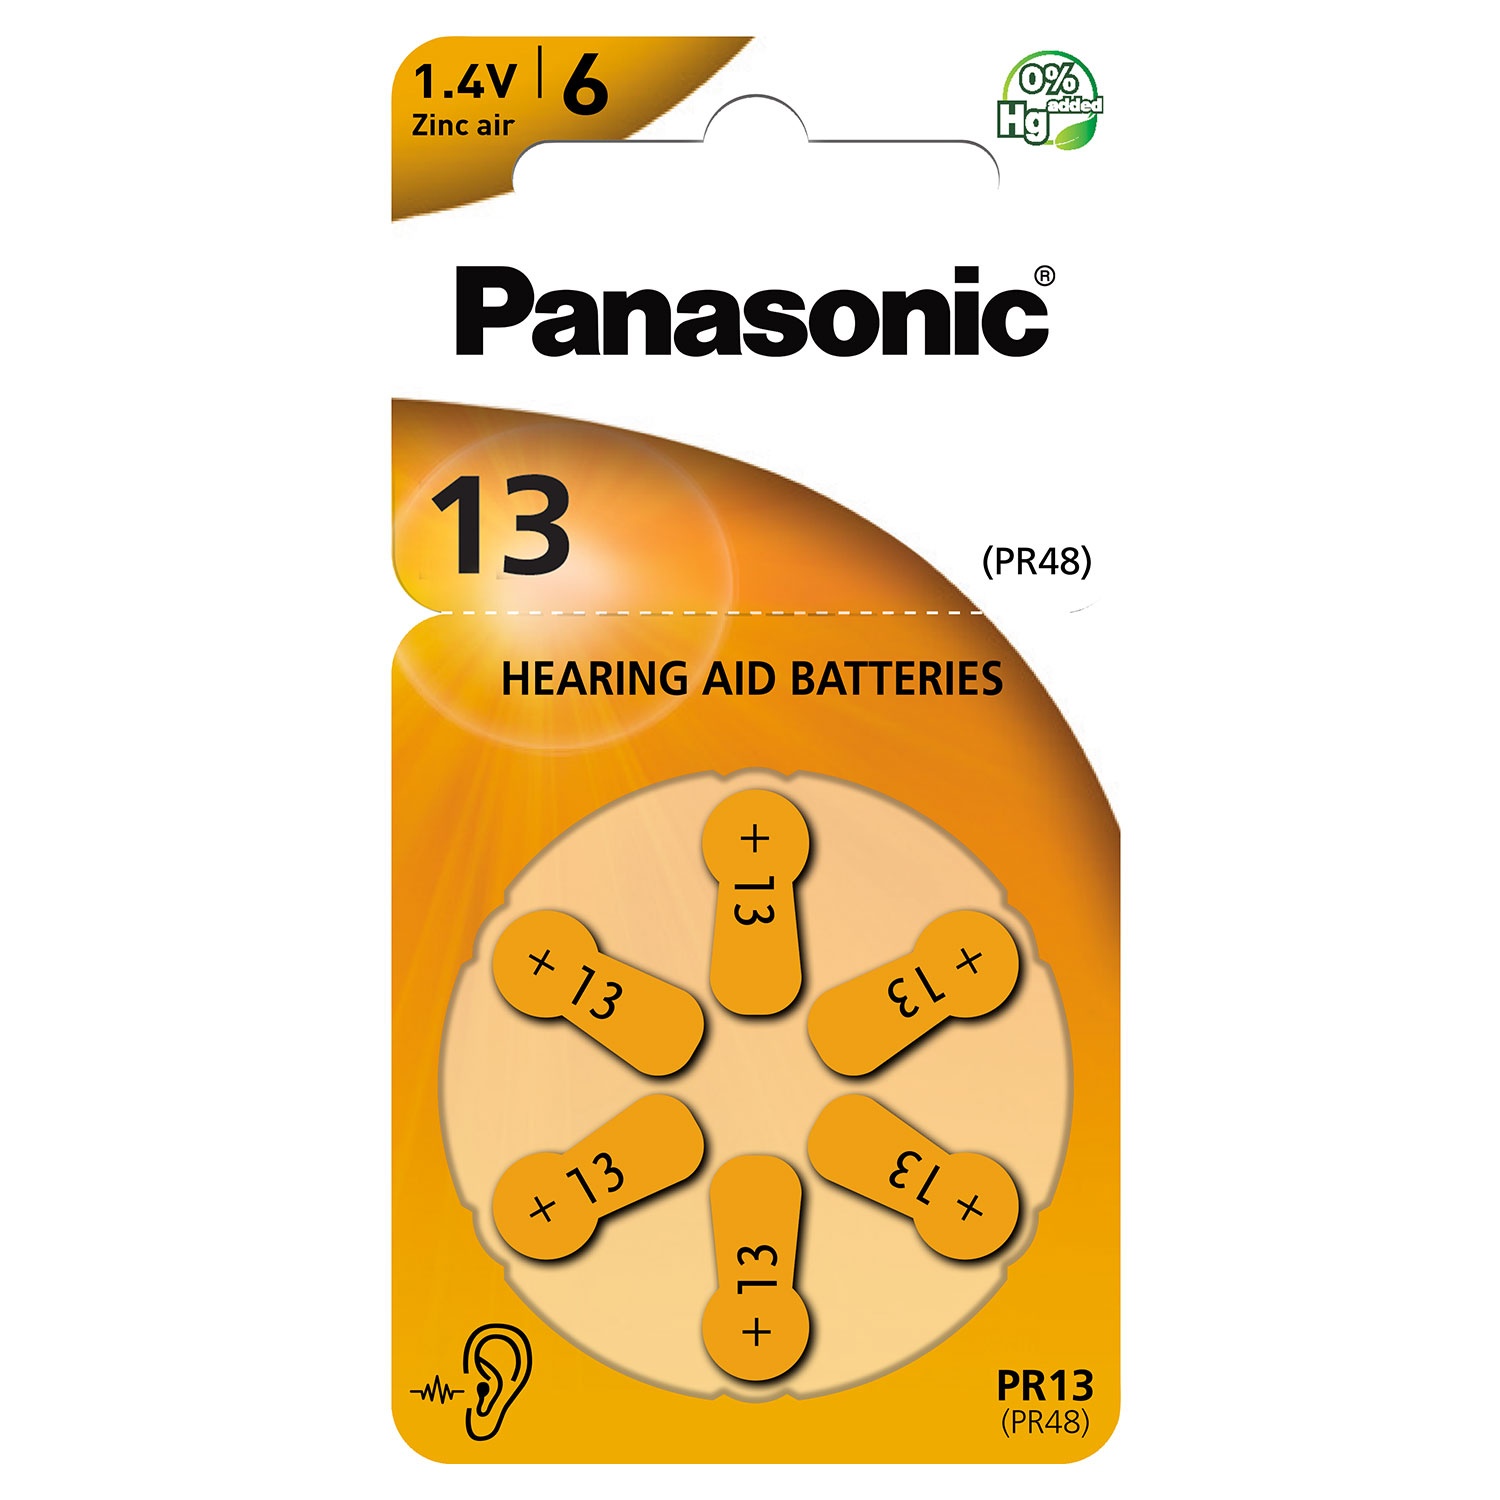 PANASONIC Hörgerätebatterien, 24er Packung